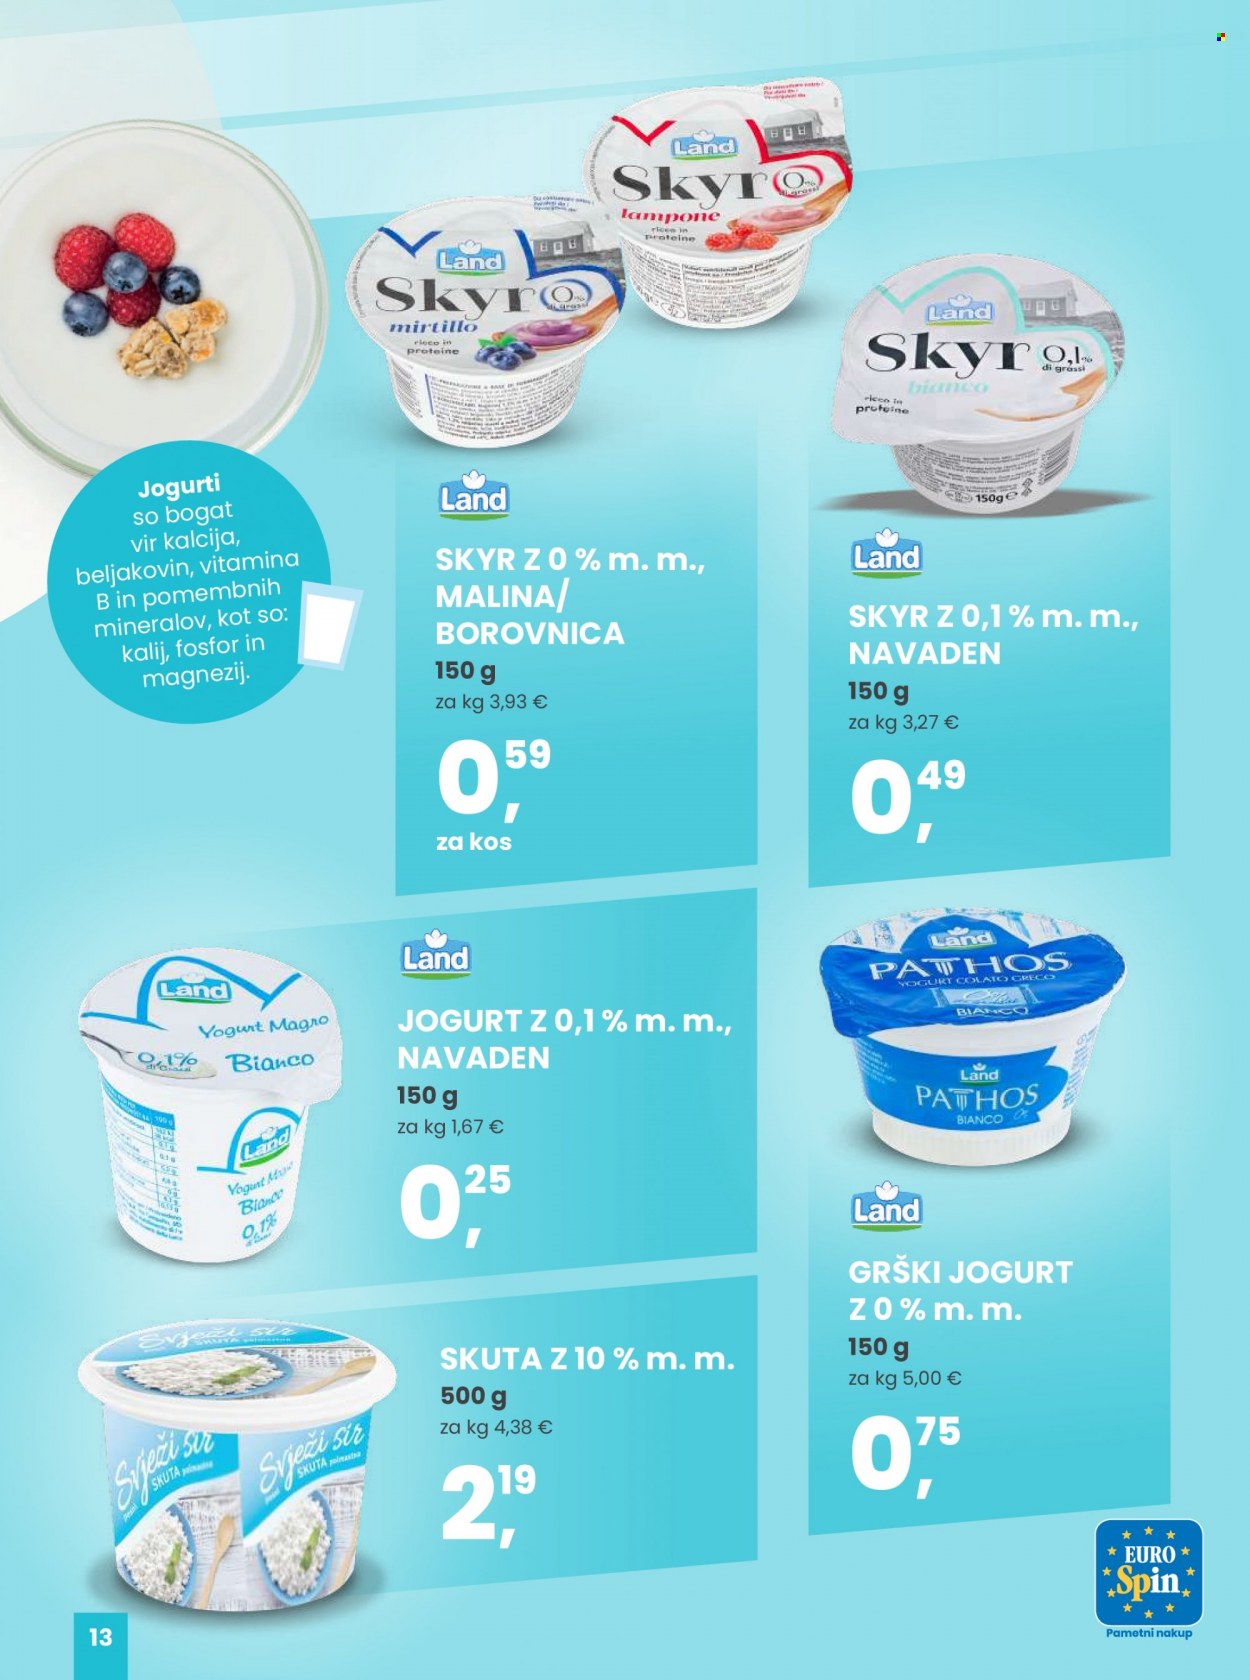 thumbnail - EuroSpin katalog - Ponudba izdelkov - sir, skuta, grški jogurt, jogurt, Skyr, sani. Stran 13.